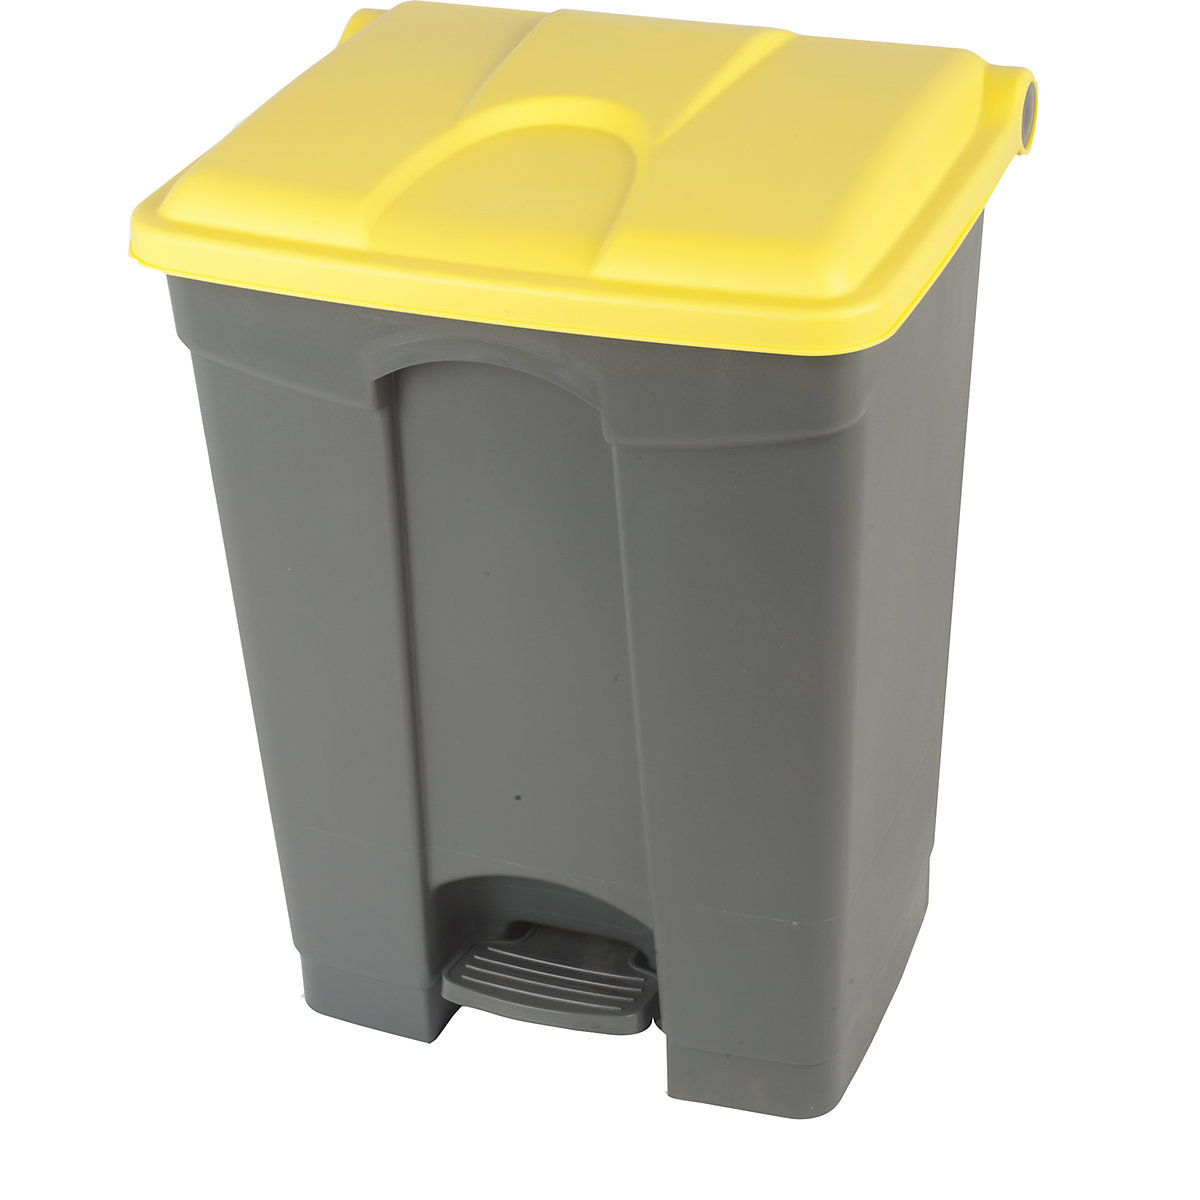 EUROKRAFTbasic – Pedal waste collector, capacity 70 l, WxHxD 505 x 675 x 415 mm, grey, yellow lid